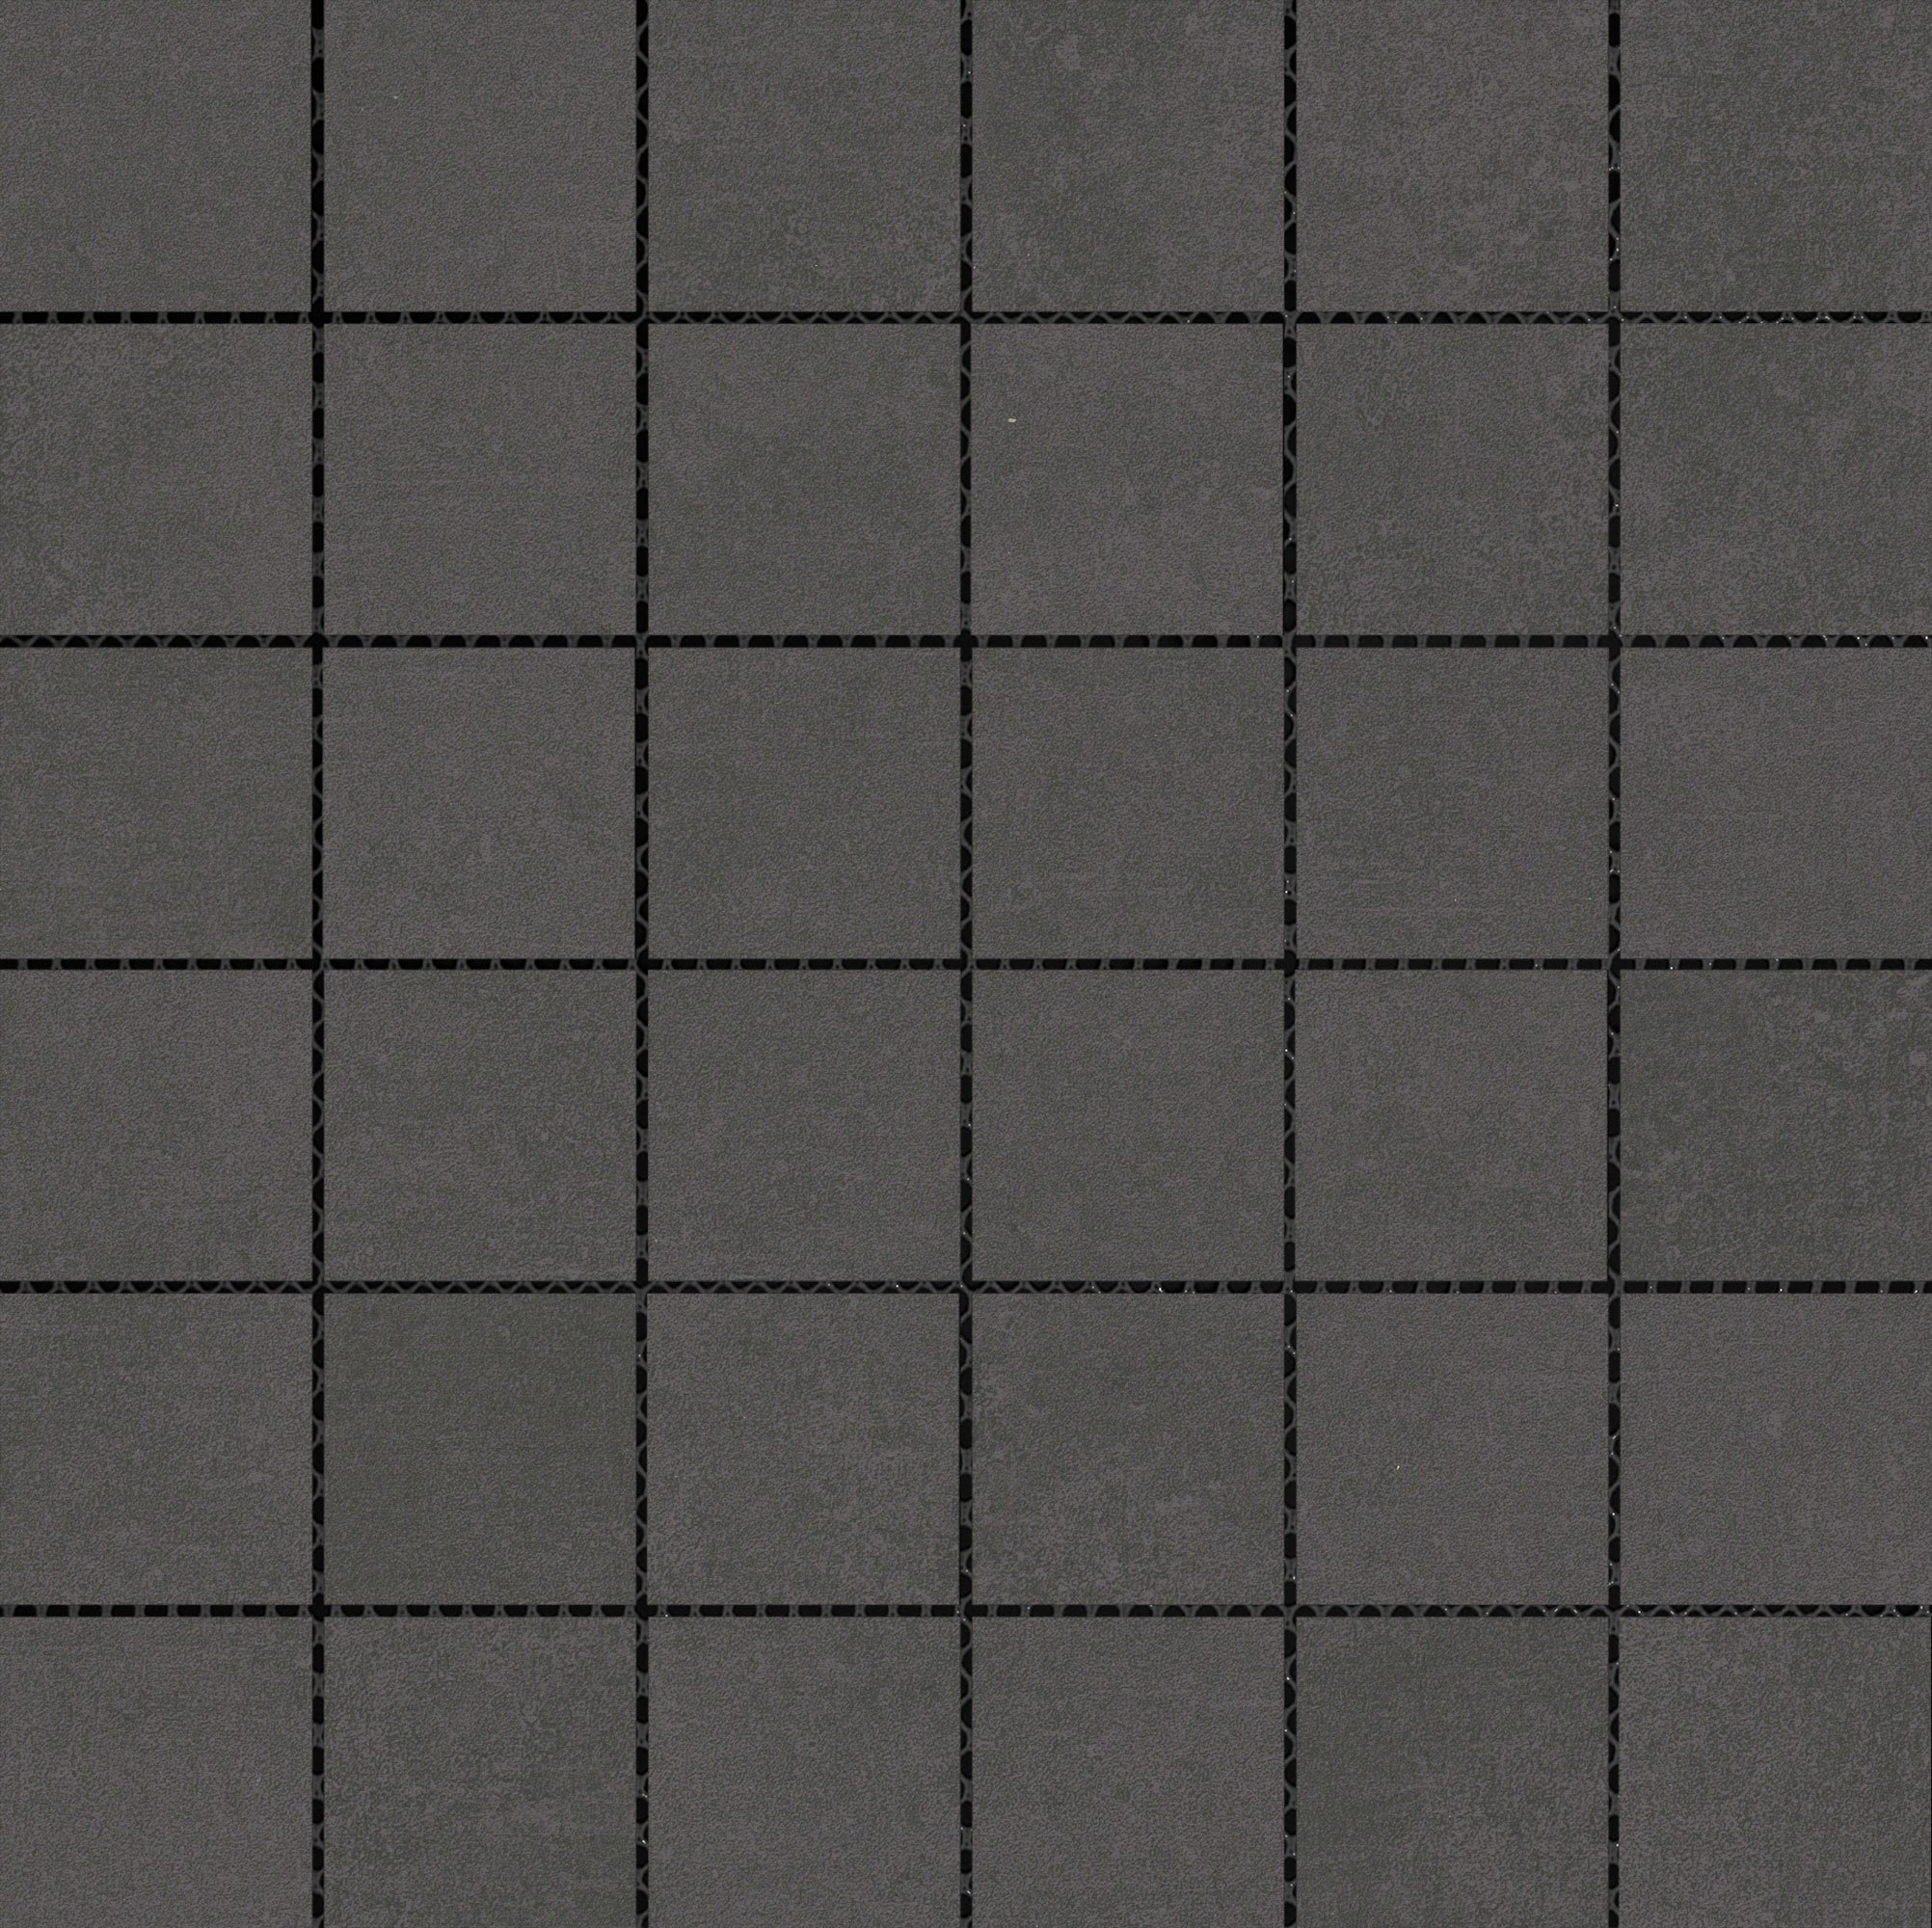 Chiado II Loring 2x2 mosaic tile on 12x12 mesh glazed porcelain floor and wall tile Emser tile